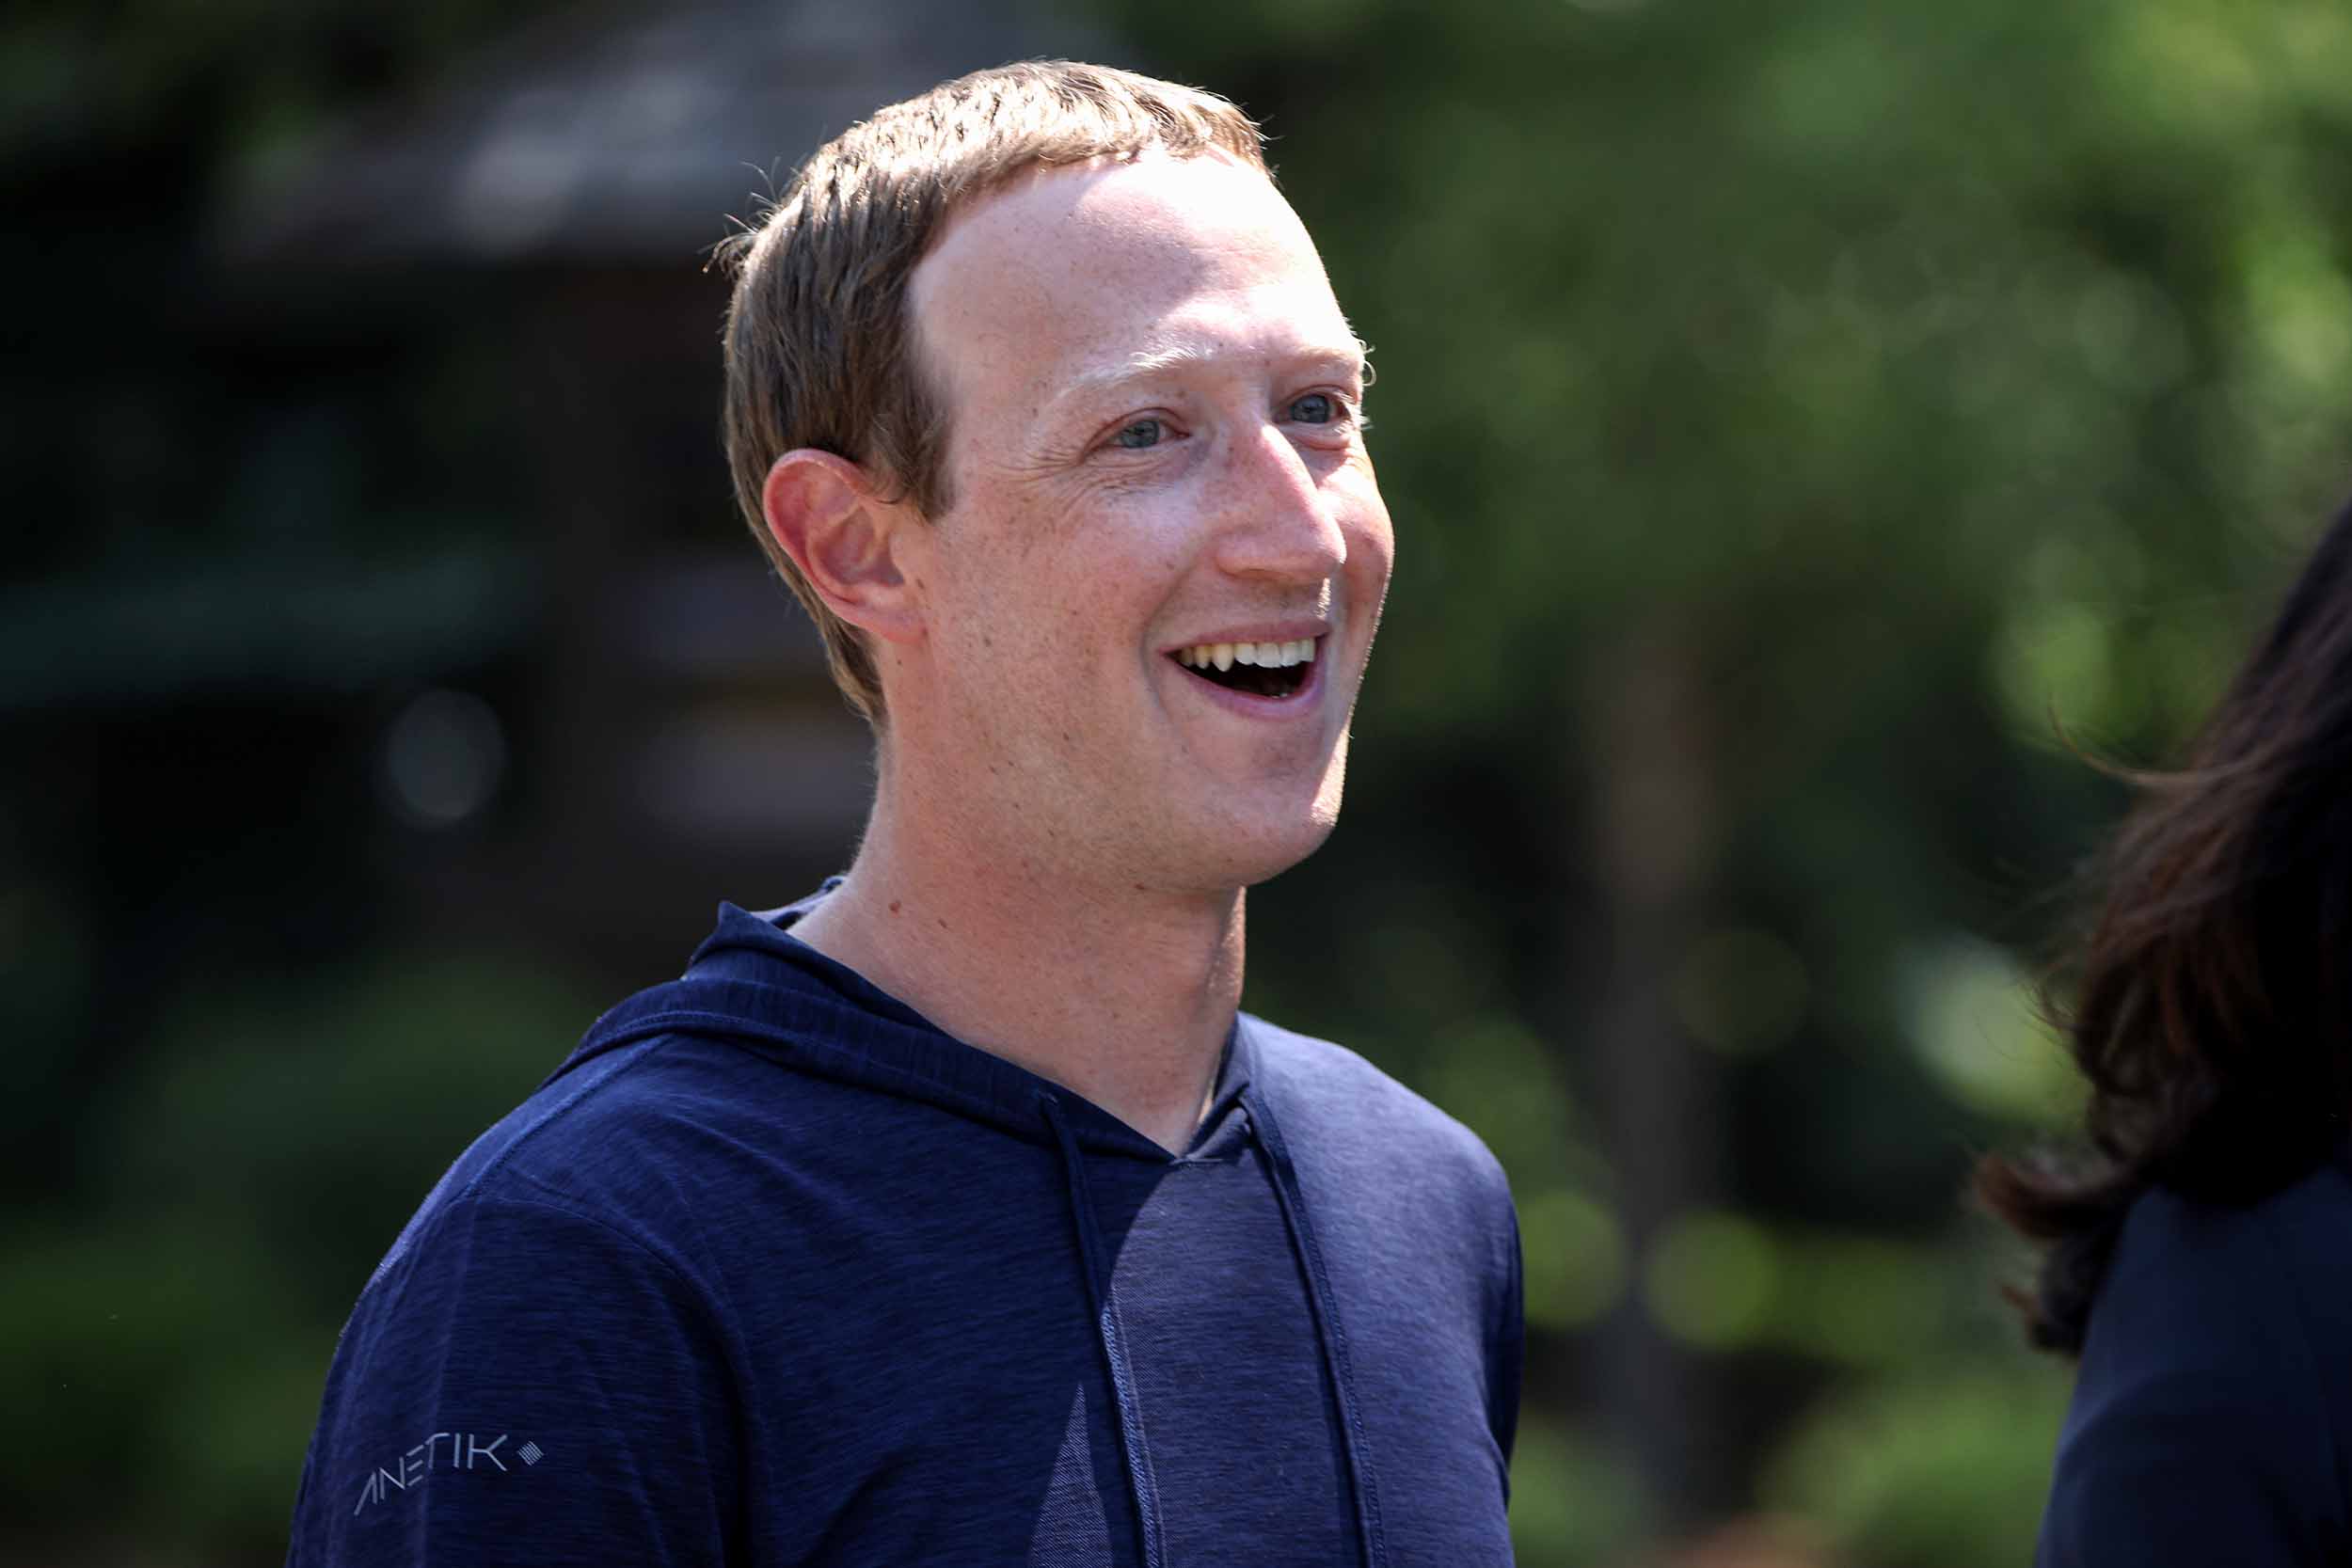 A photo of Mark Zuckerberg, the CEO and cofounder of Facebook.